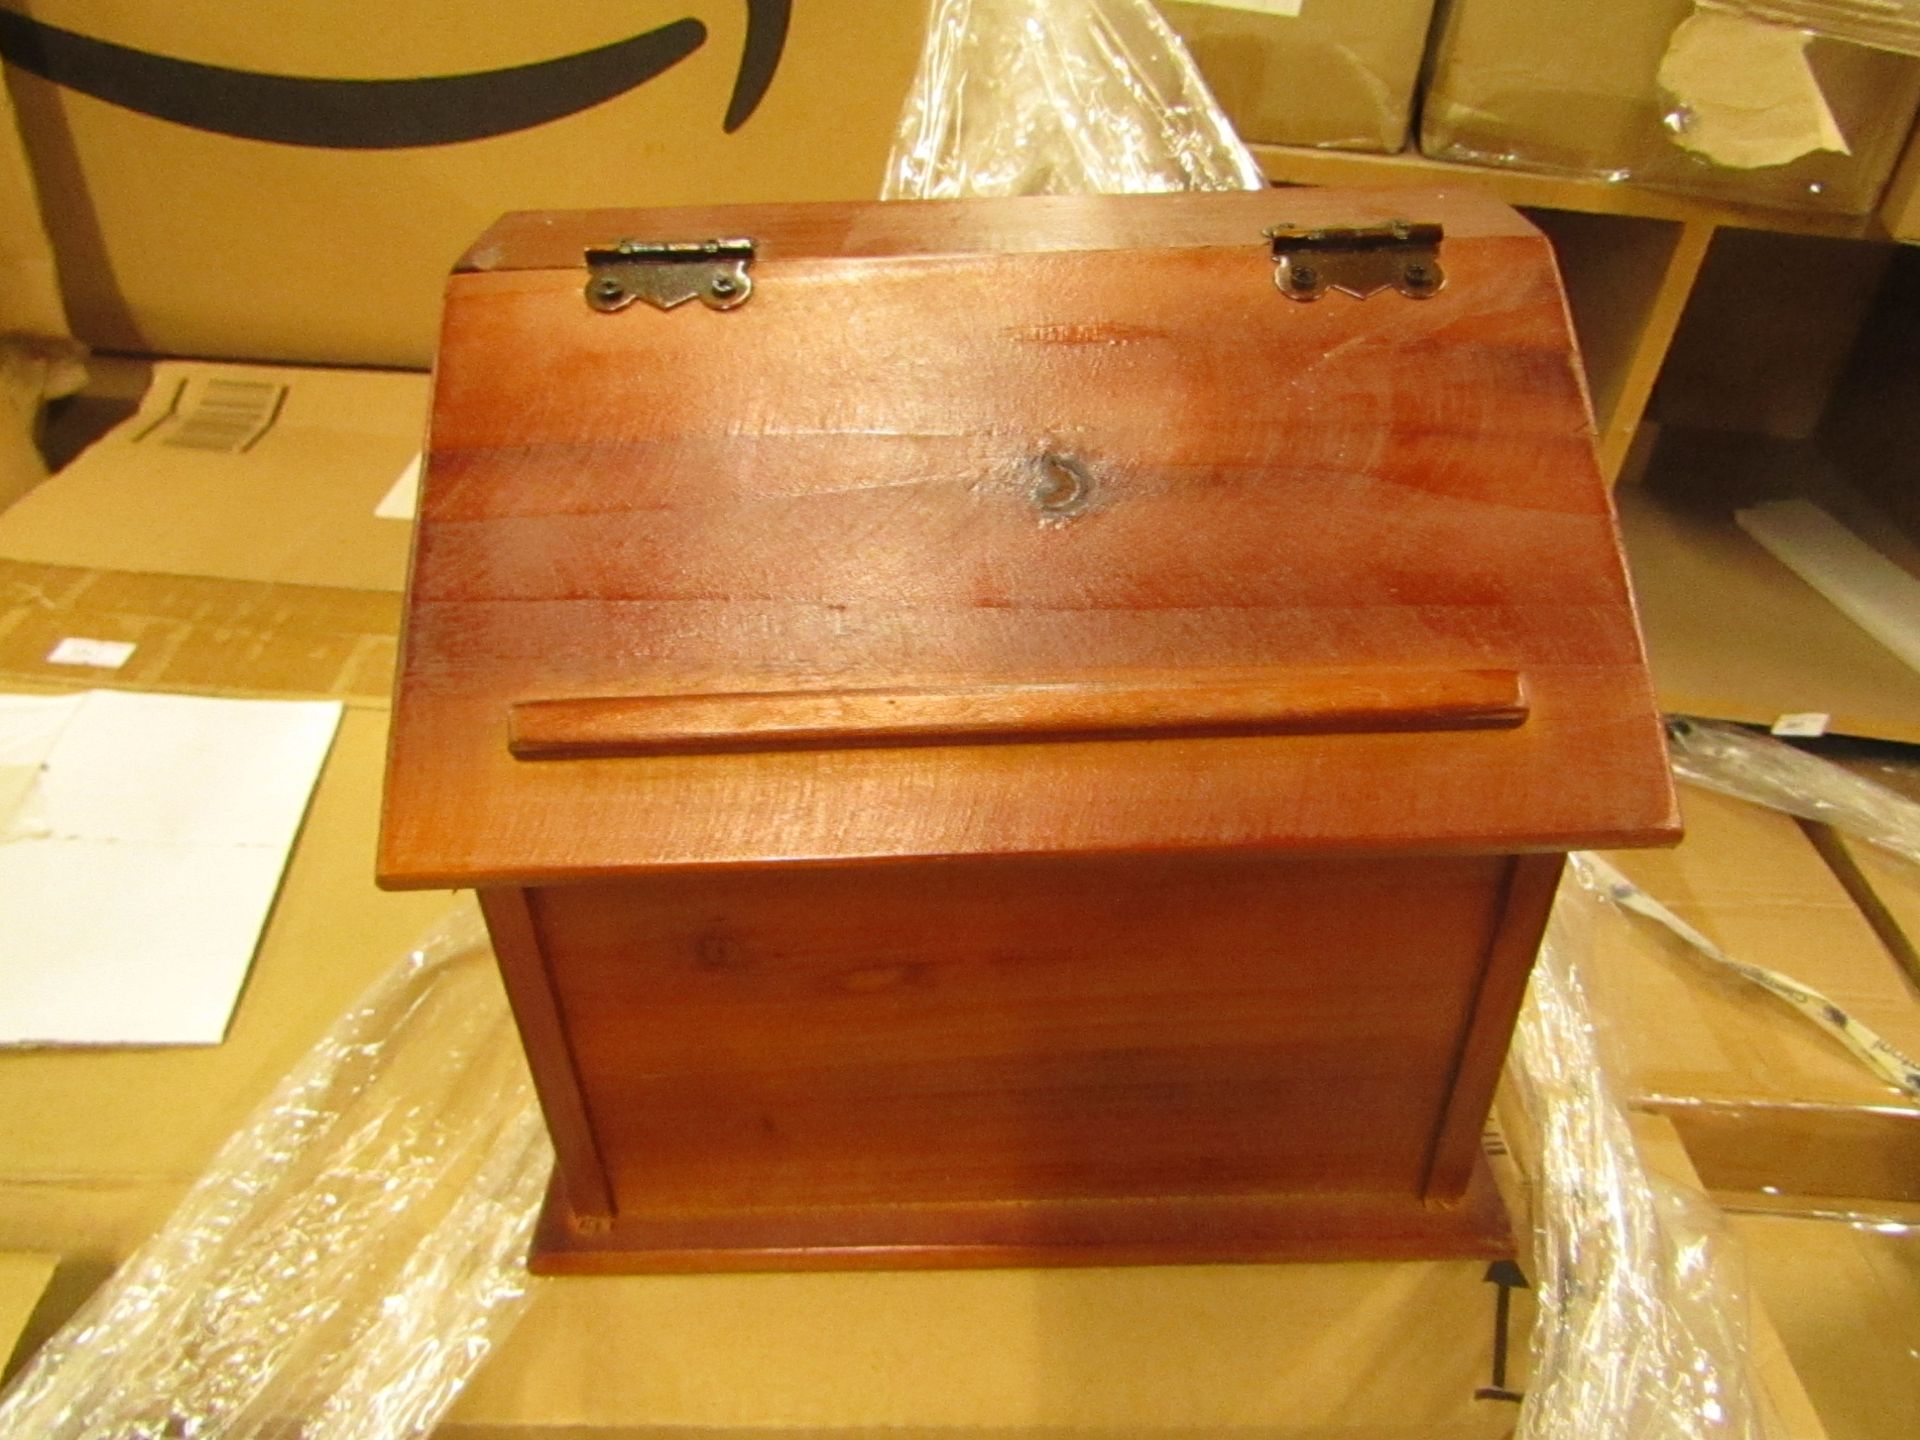 Wooden Podium Recipe Box. New & boxed